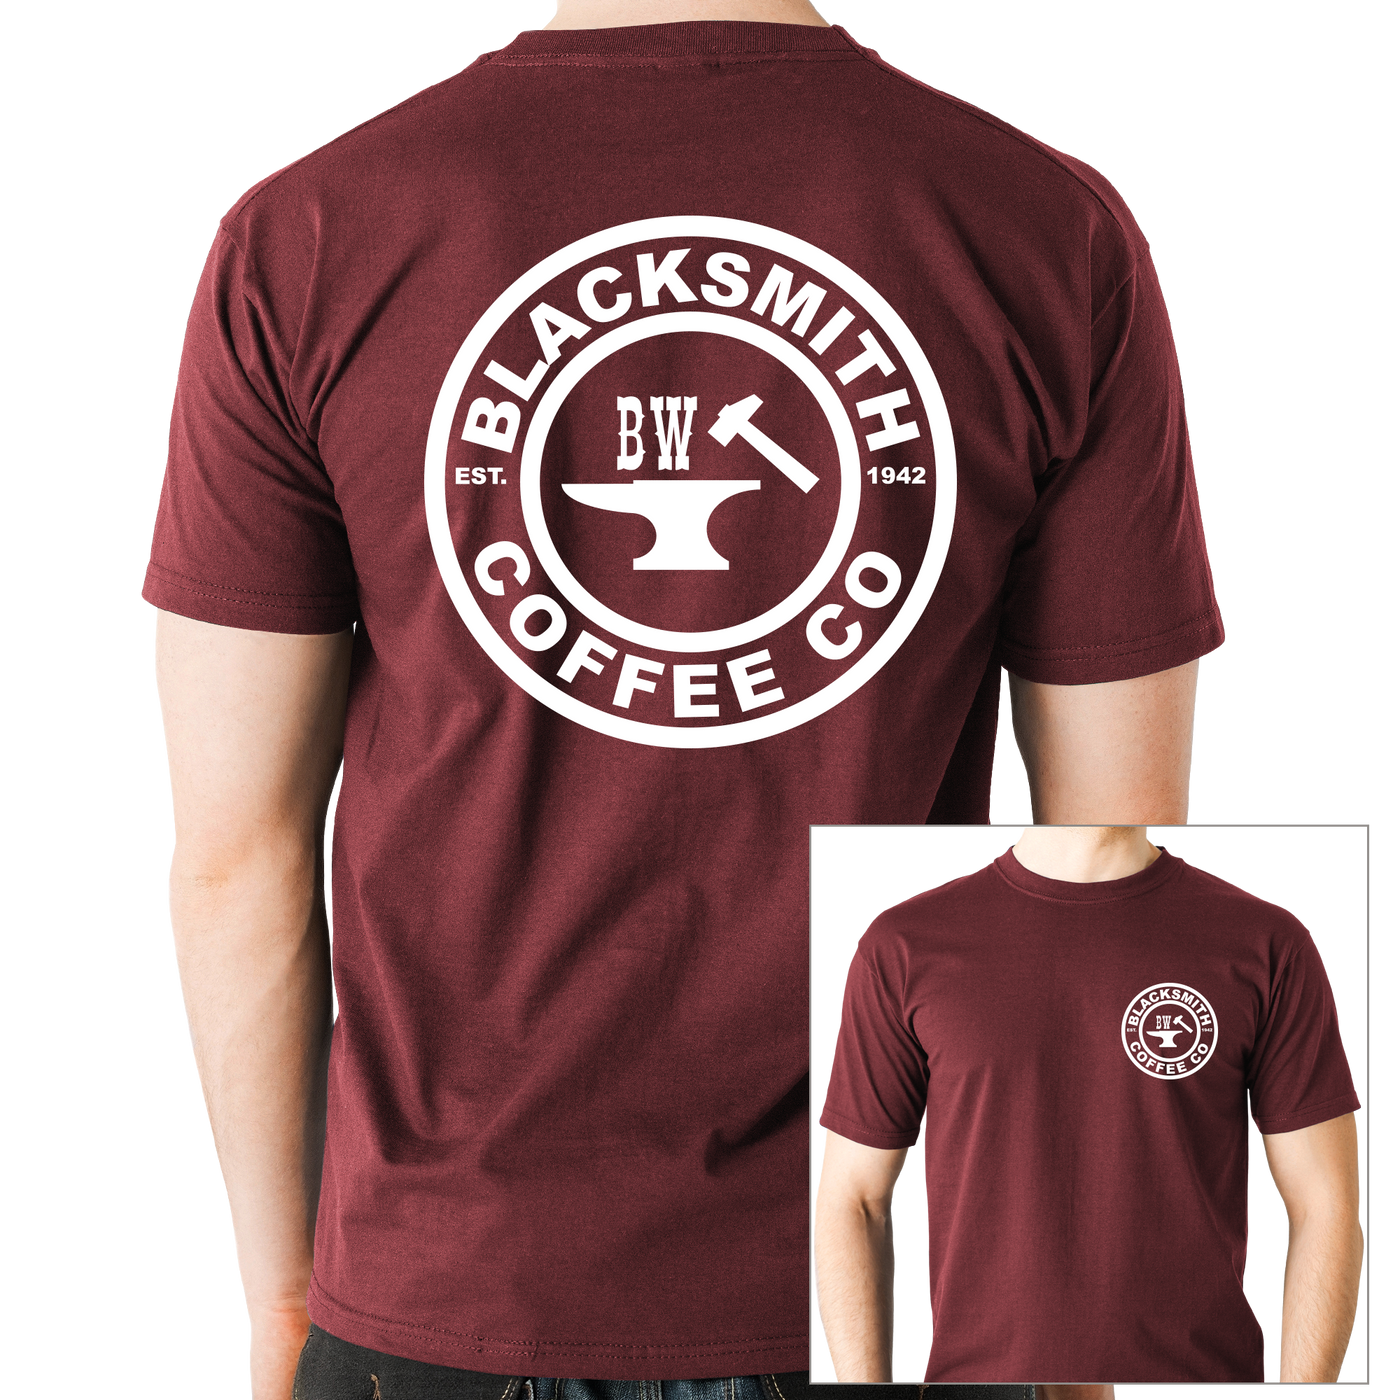 BW Blacksmith (Signature Series) Cotton T-Shirt: Maroon